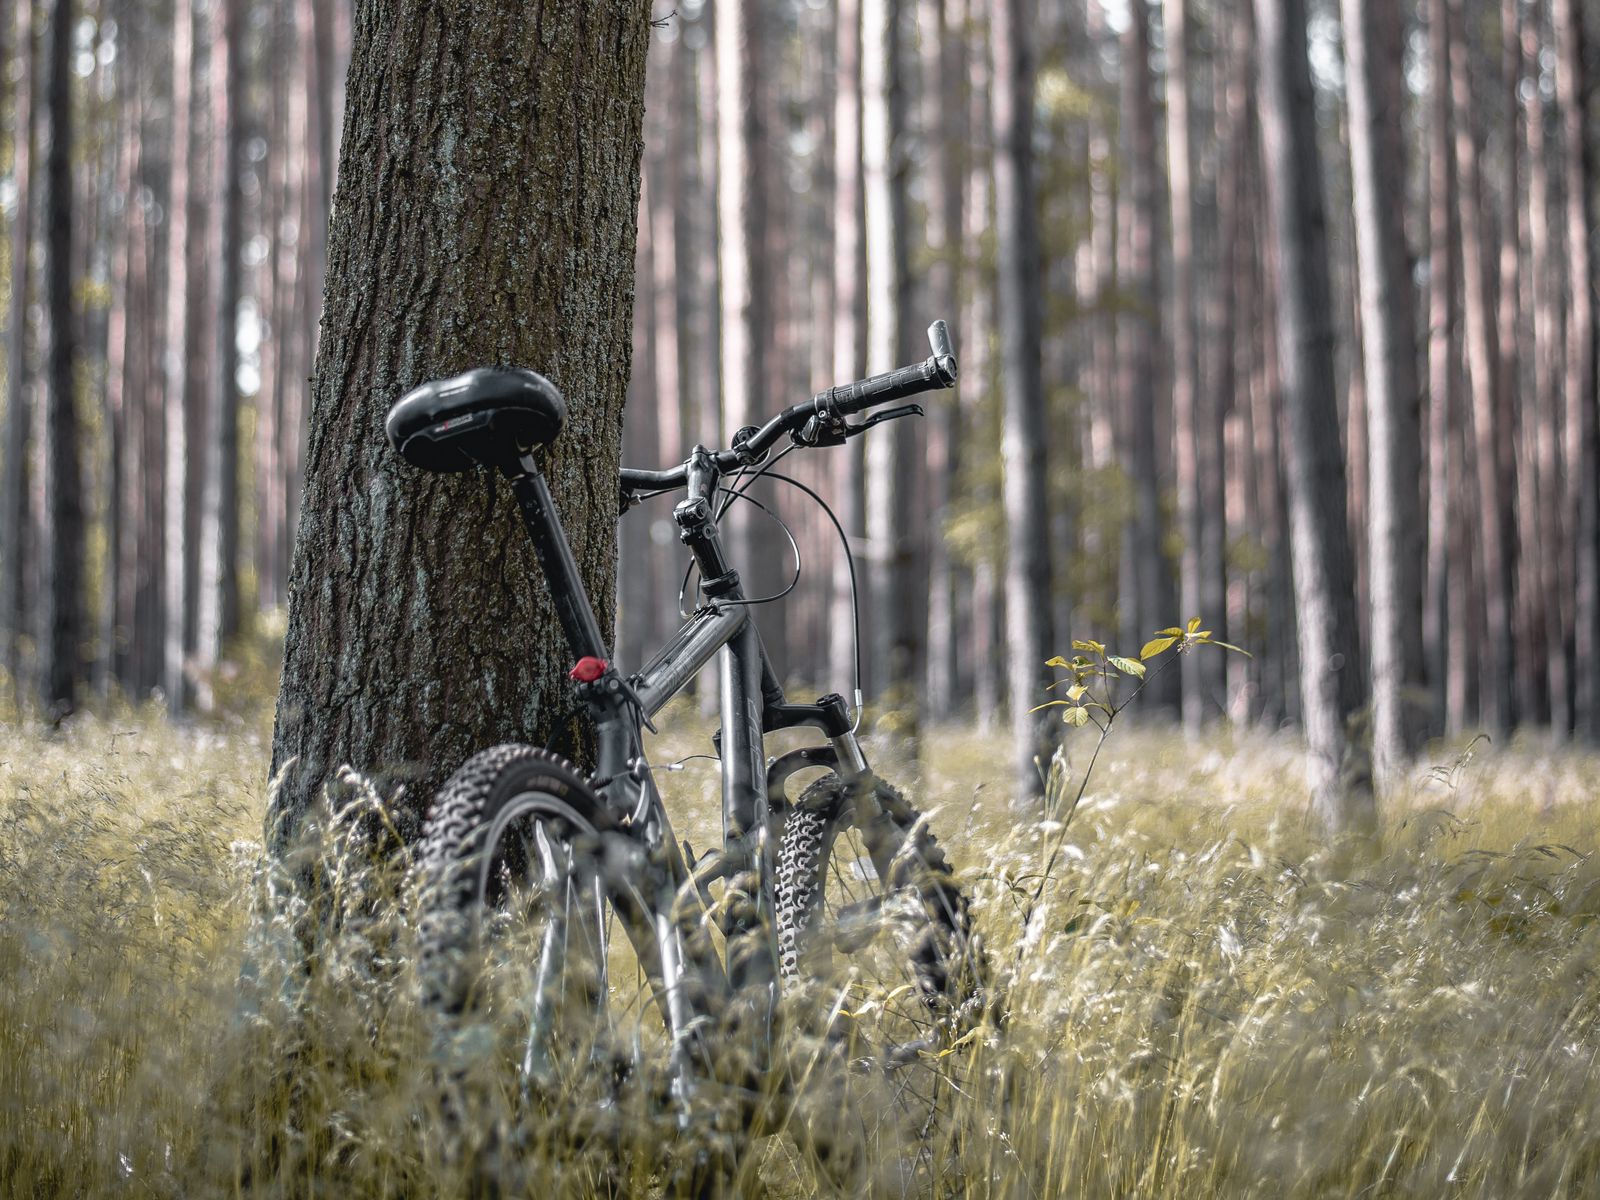 Download wallpaper 1600x1200 bike, forest, trees, walk standard 4:3 hd ...